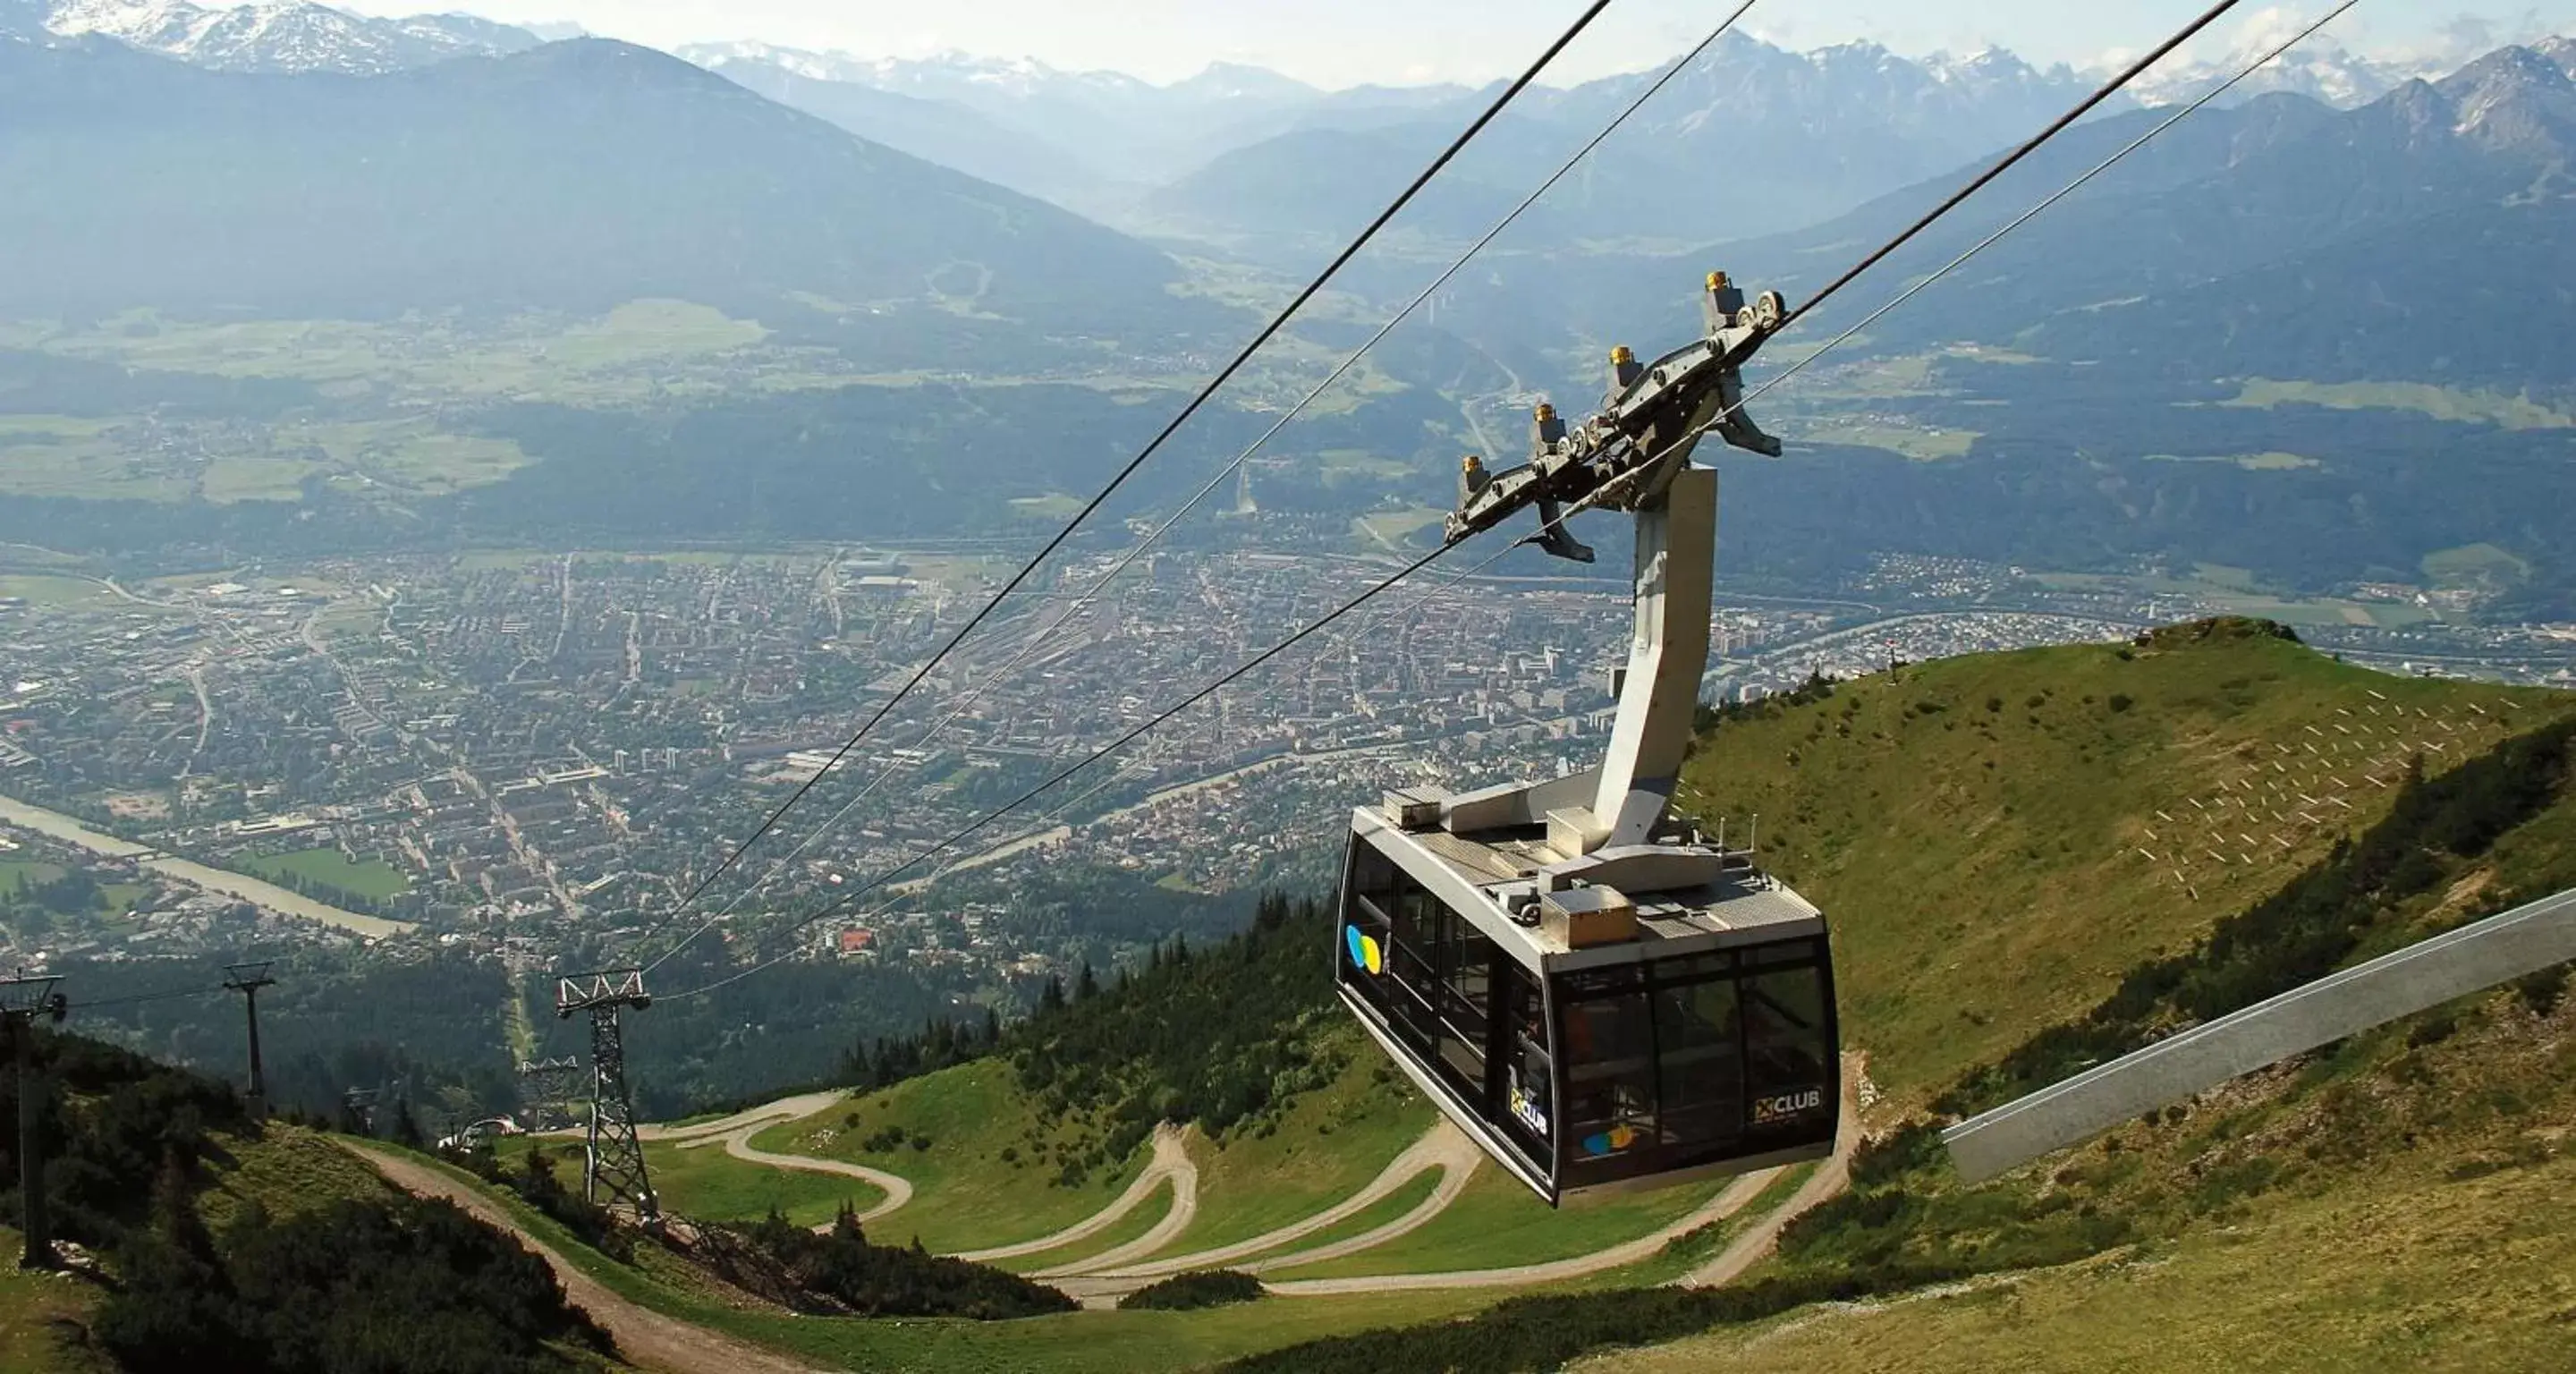 Off site, Bird's-eye View in BEST WESTERN Plus Hotel Goldener Adler Innsbruck